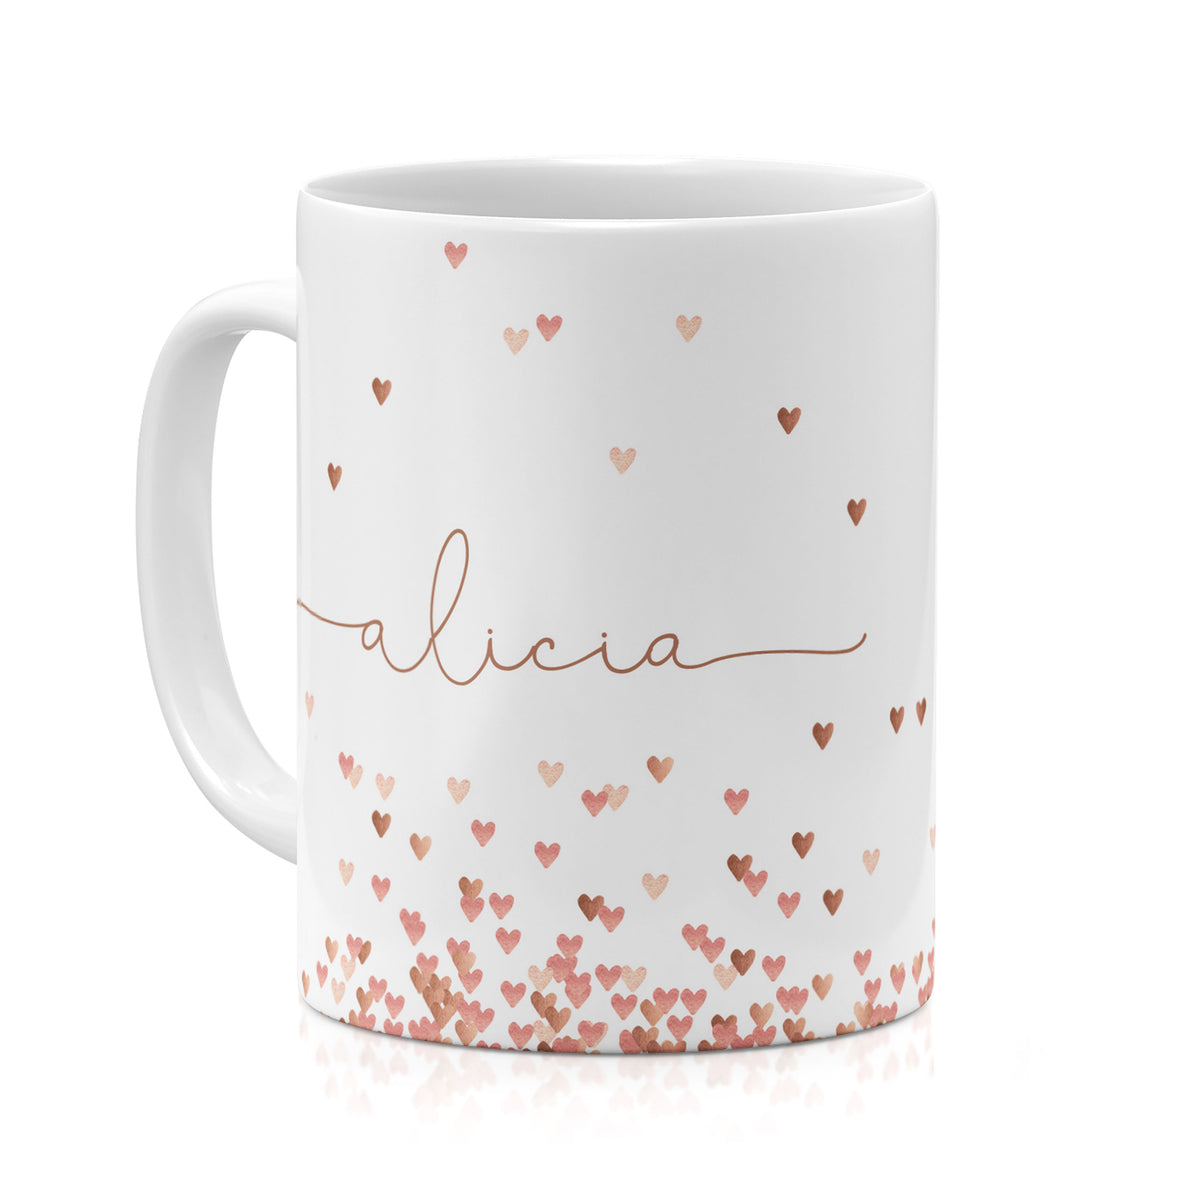 Personalised Ceramic Mug with Name Initials Text Hearts Falling Love Rain